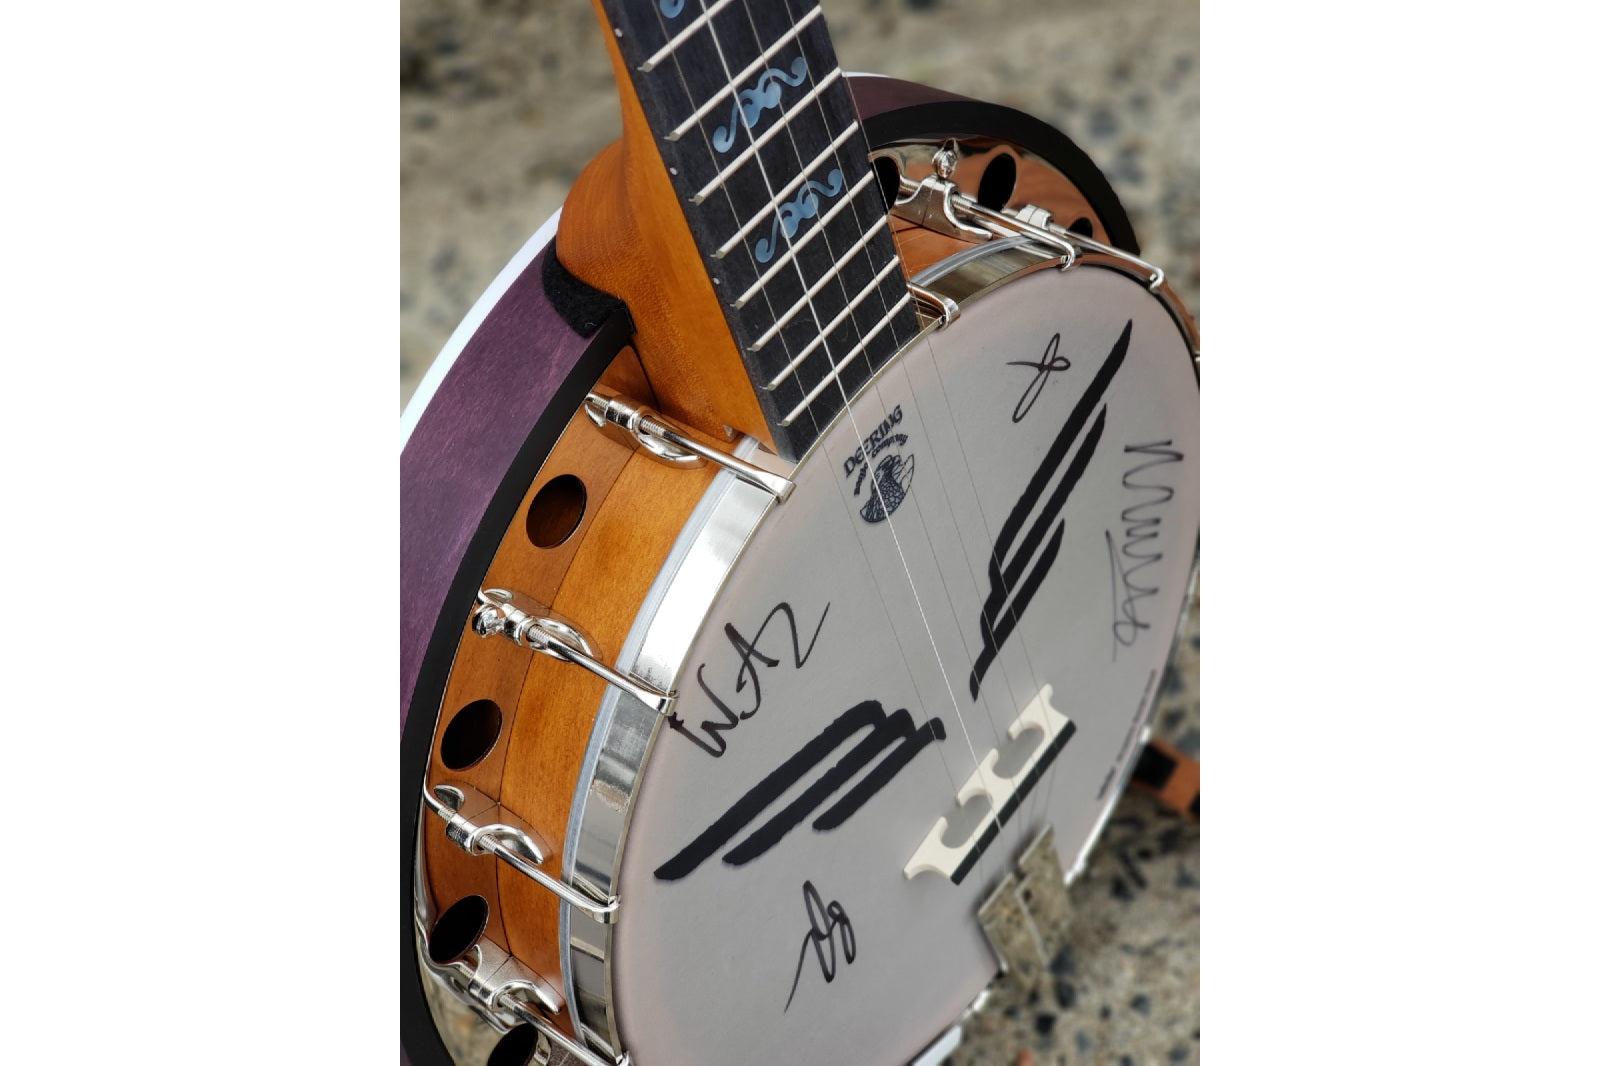 Virginia Charity Banjo